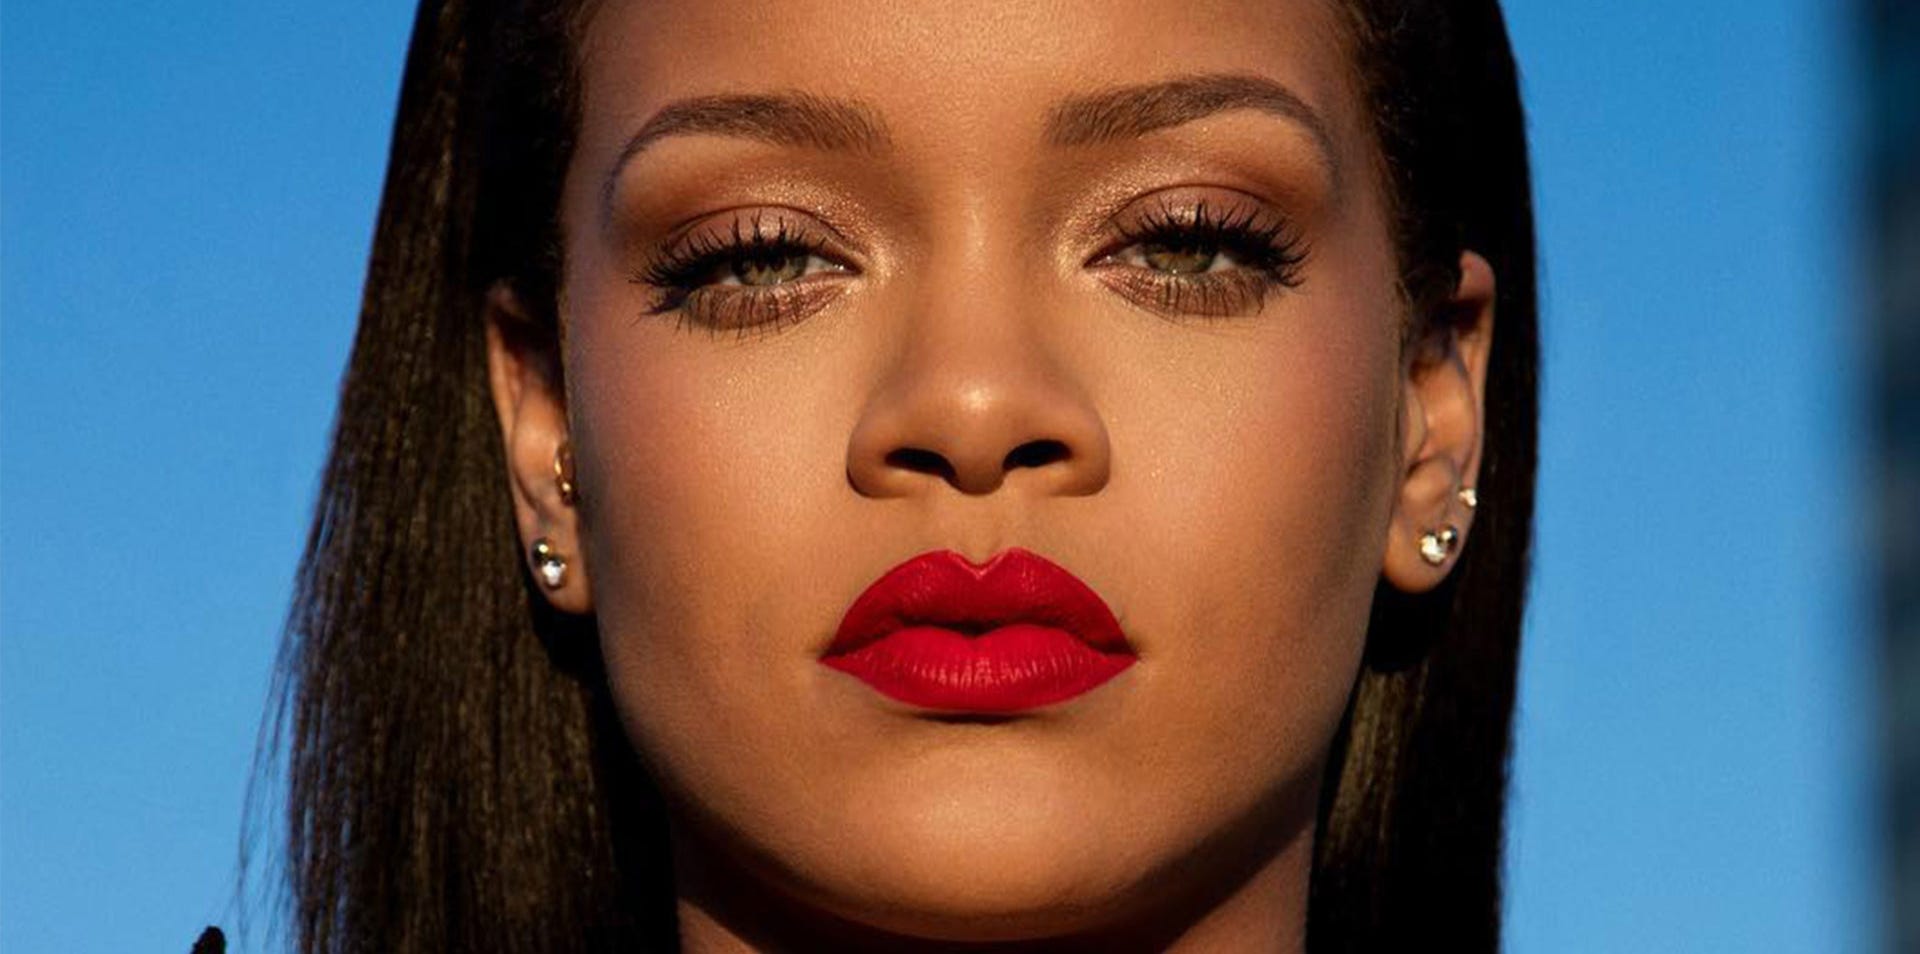 Singer Rihanna photo portrait